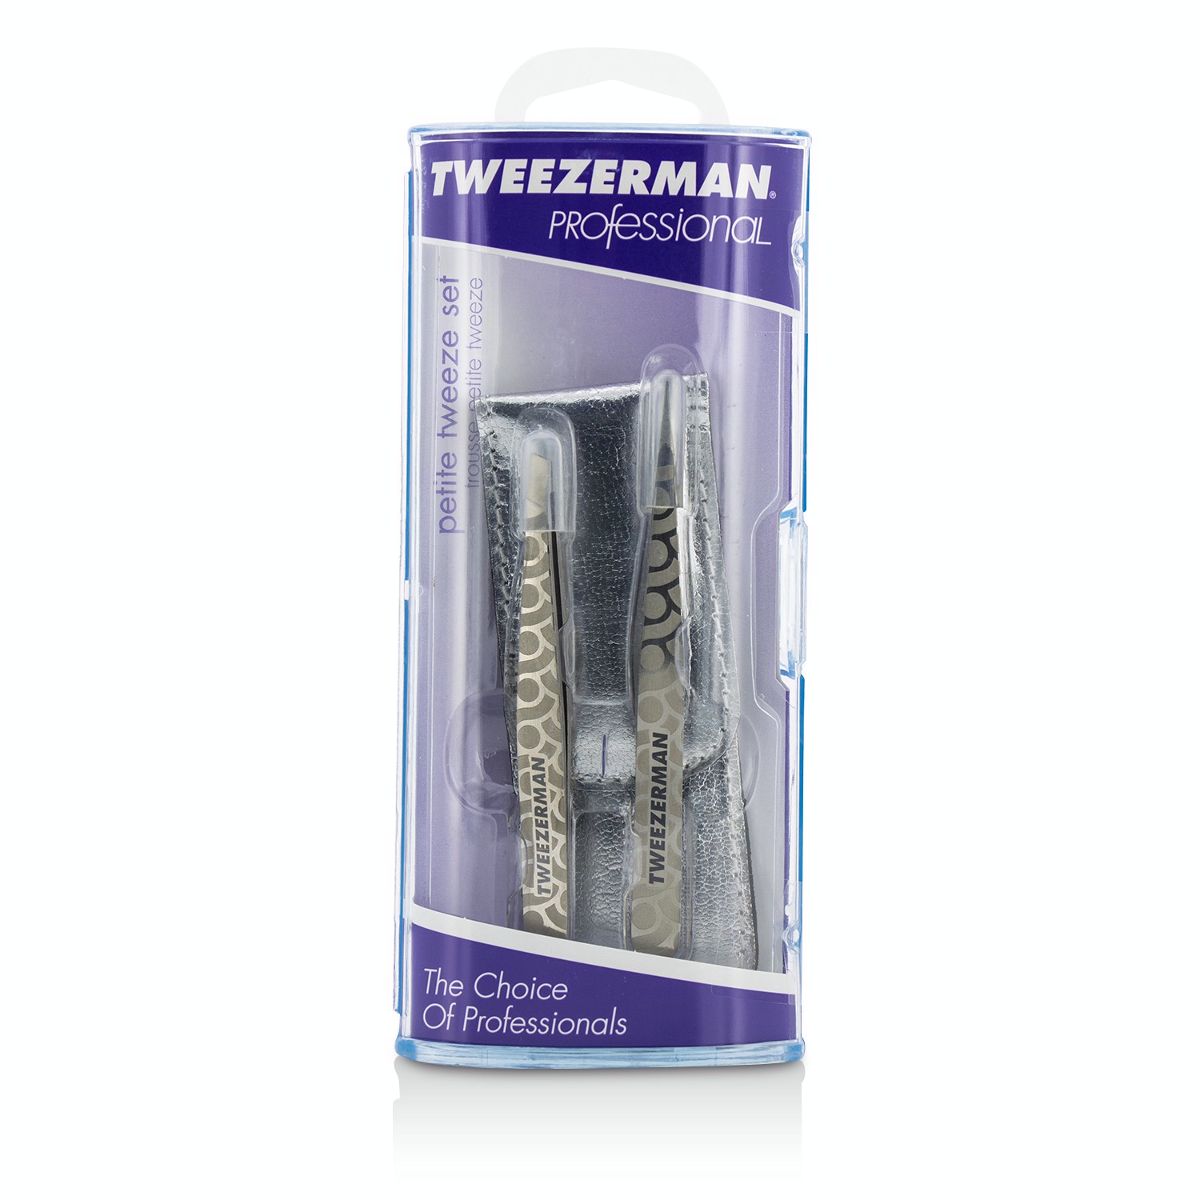 Professional Petite Tweeze Set: Slant Tweezer + Point Tweezer - (Regency Finish w/ Silver Leather Case) Tweezerman Image